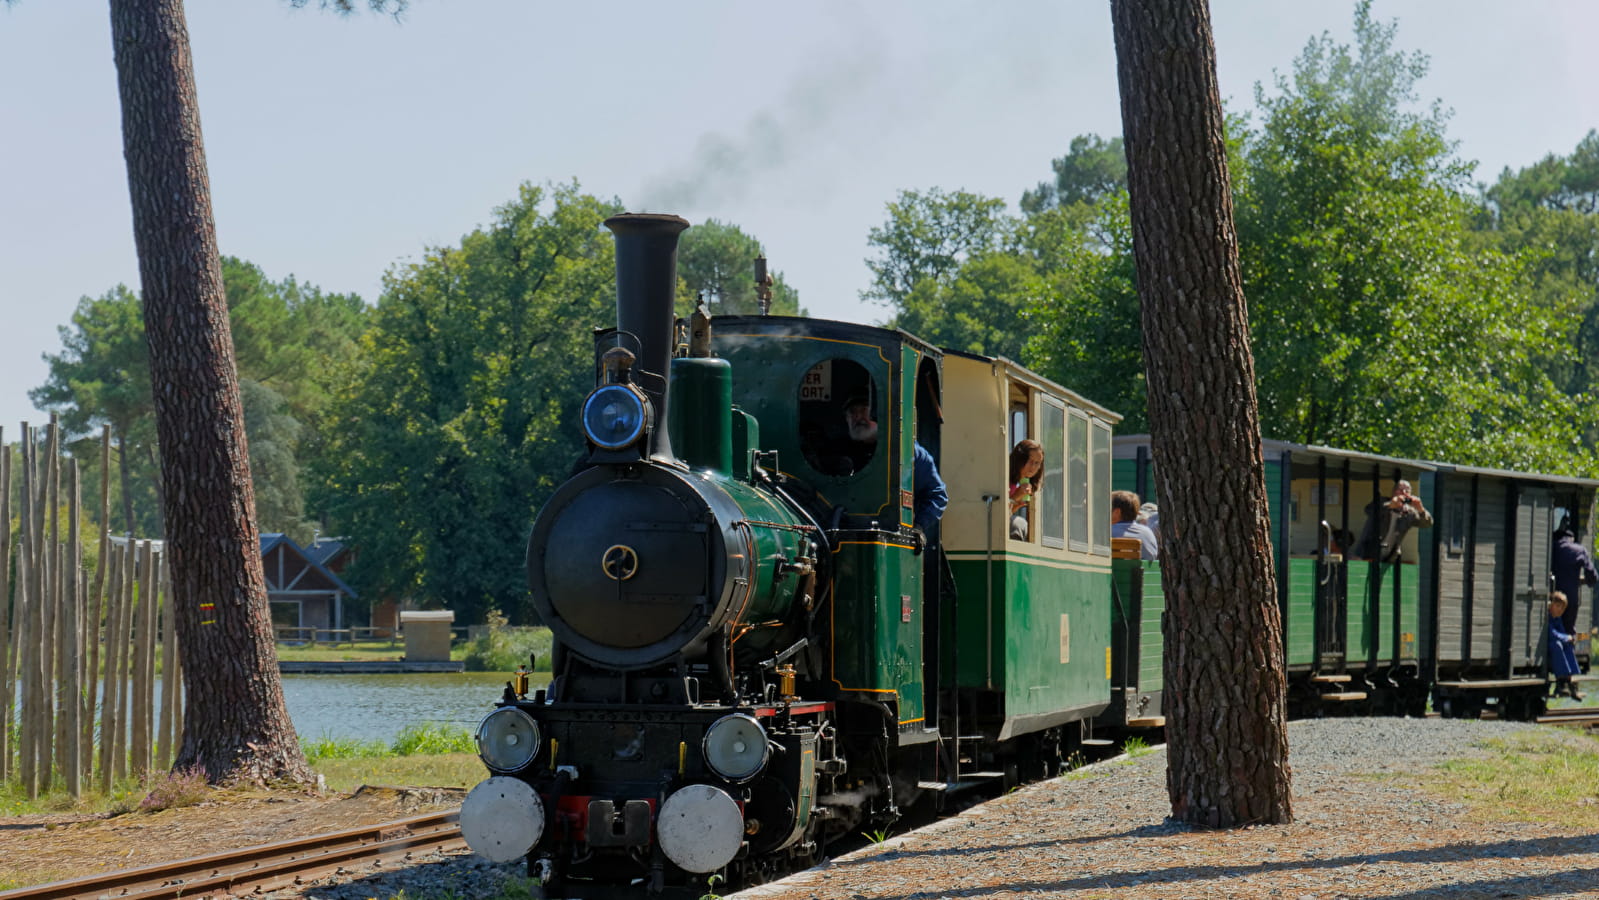 The Lac de Rillé Steam Train